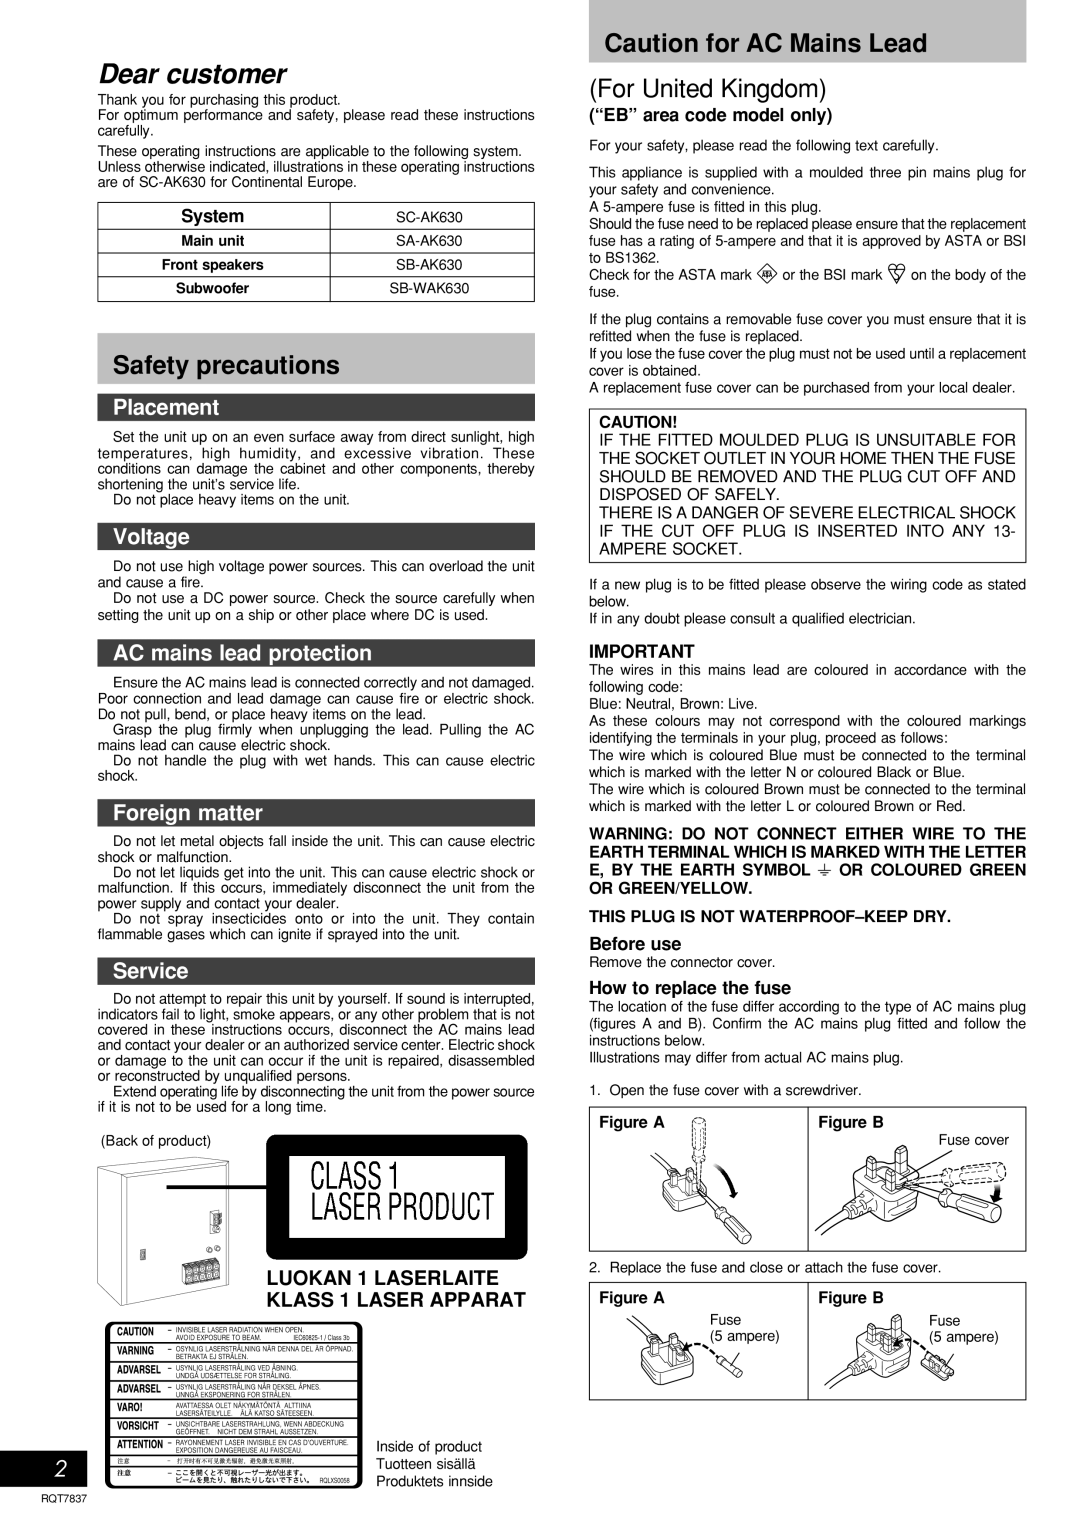 Panasonic SC-AK630 Safety precautions, Caution for AC Mains Lead, Placement, Voltage, AC mains lead protection, Service 